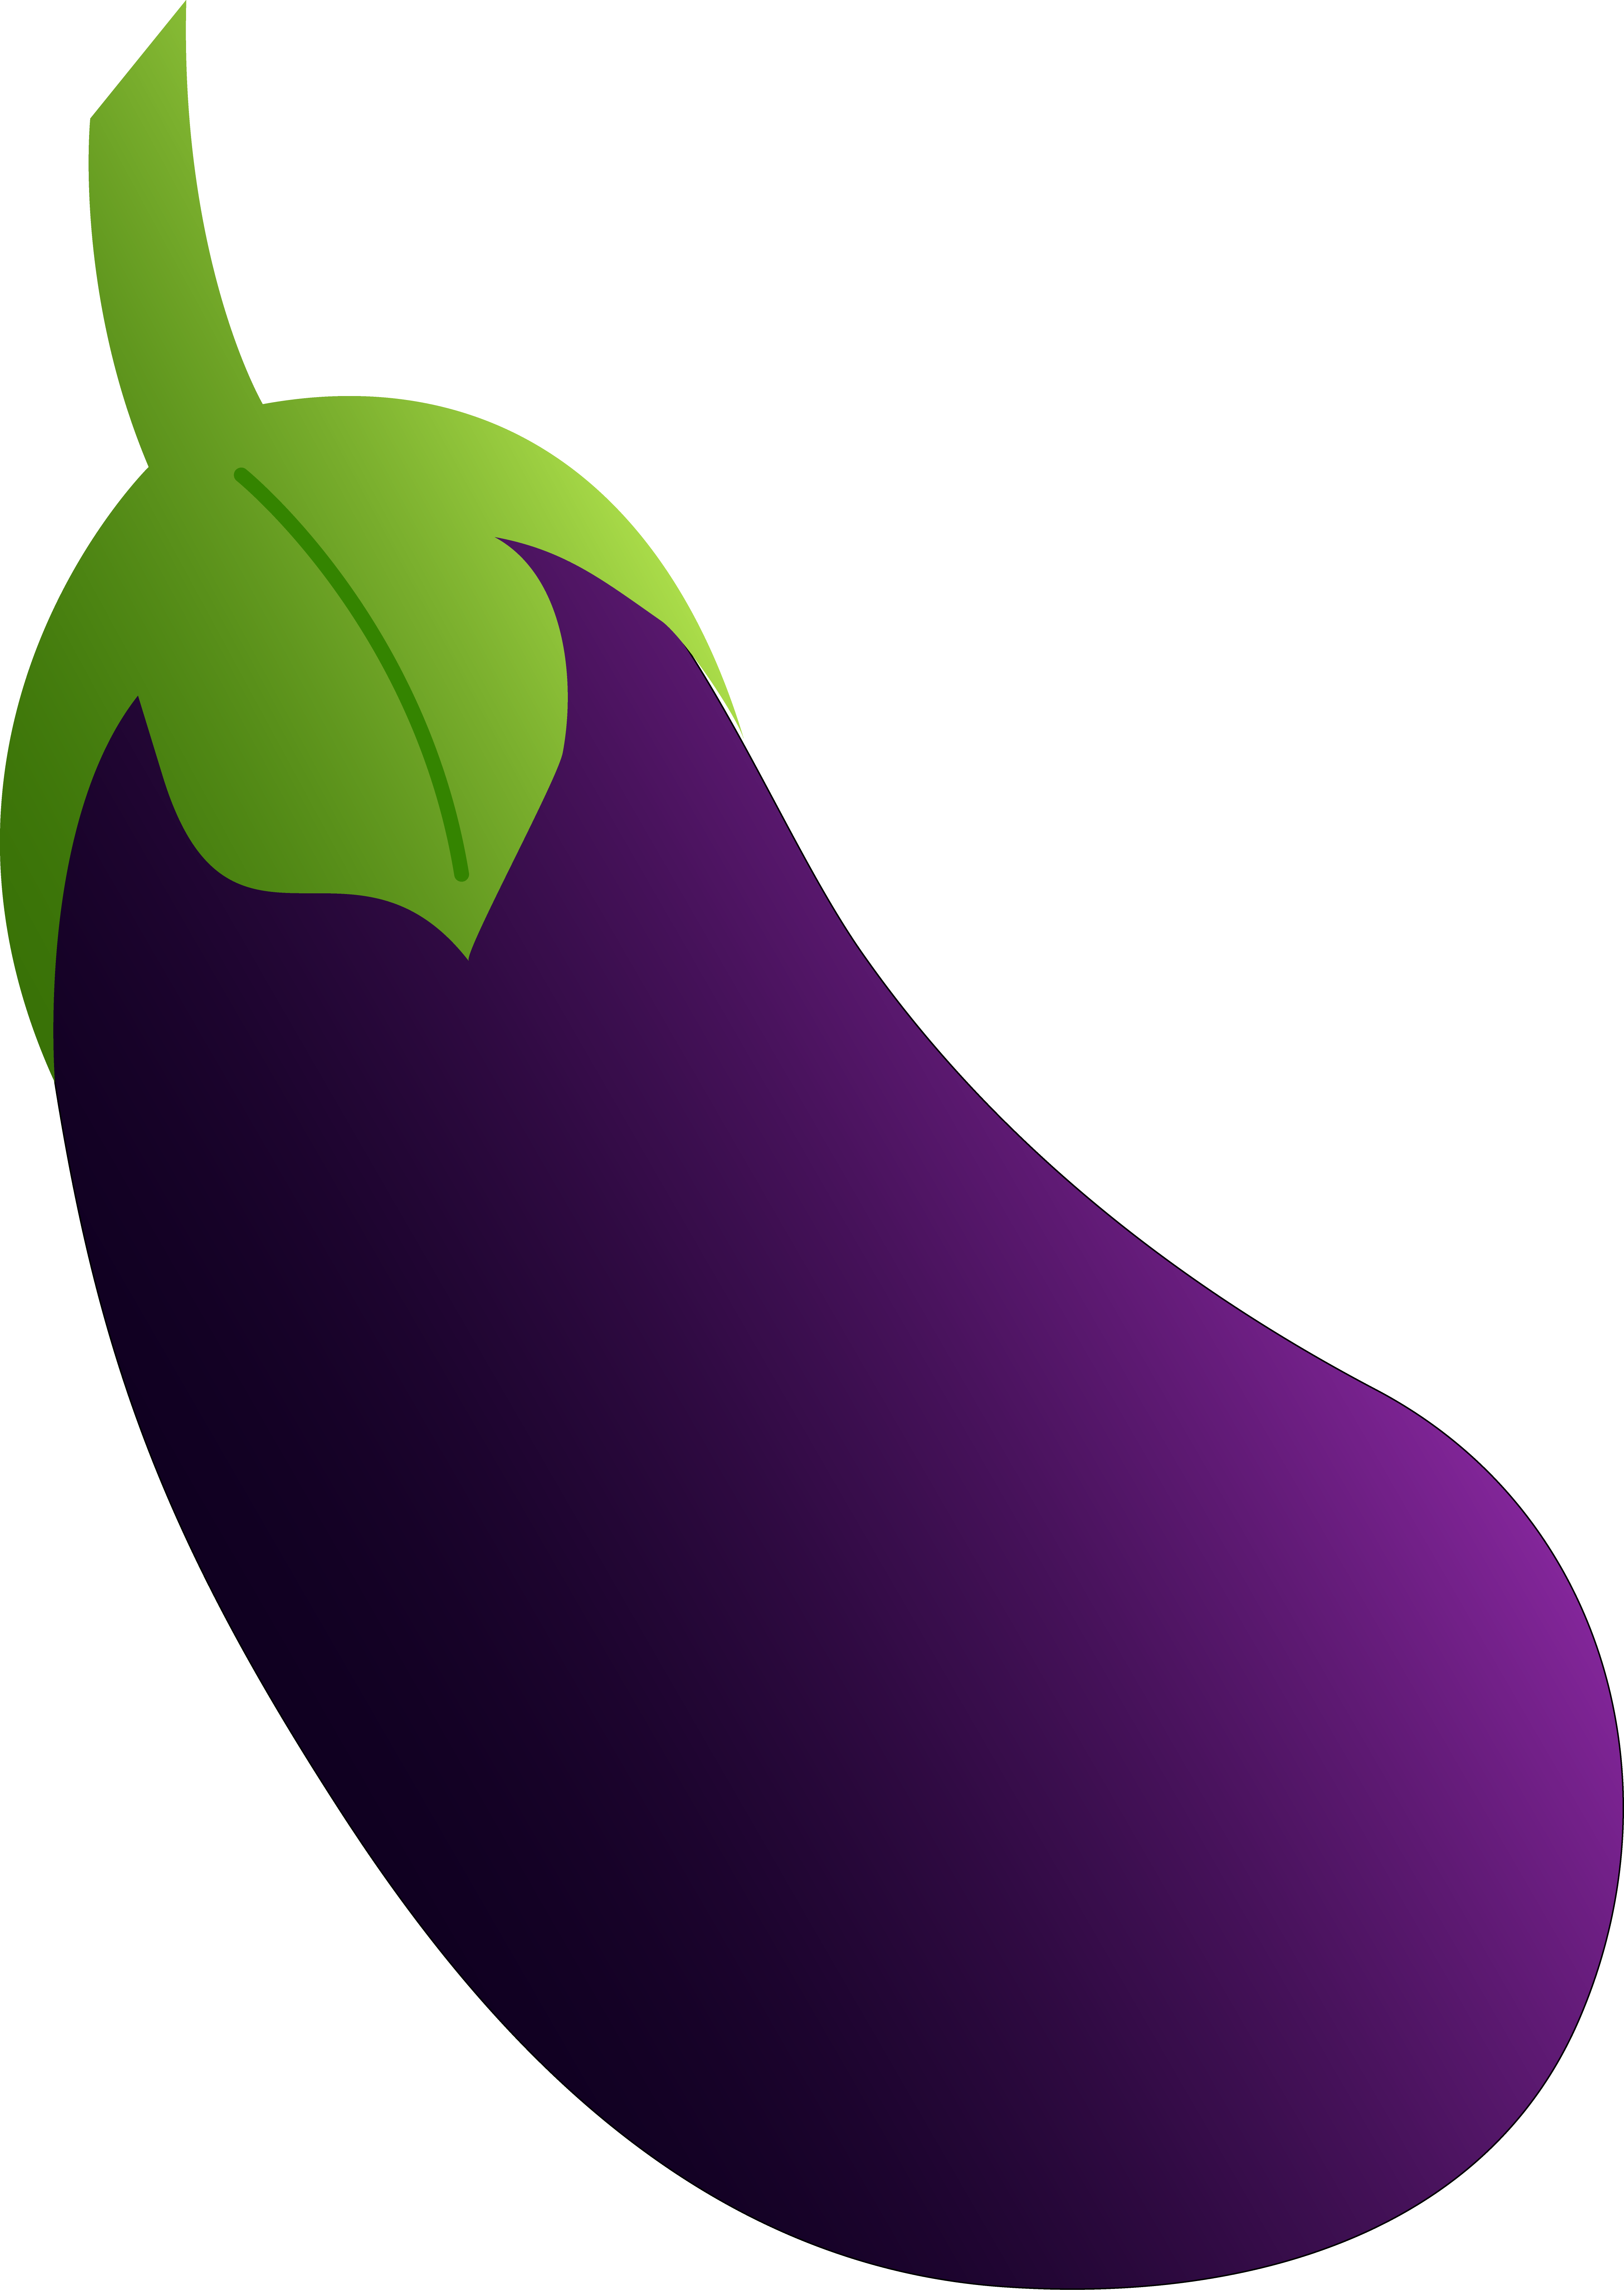 Free Eggplant Images, Download Free Clip Art, Free Clip Art